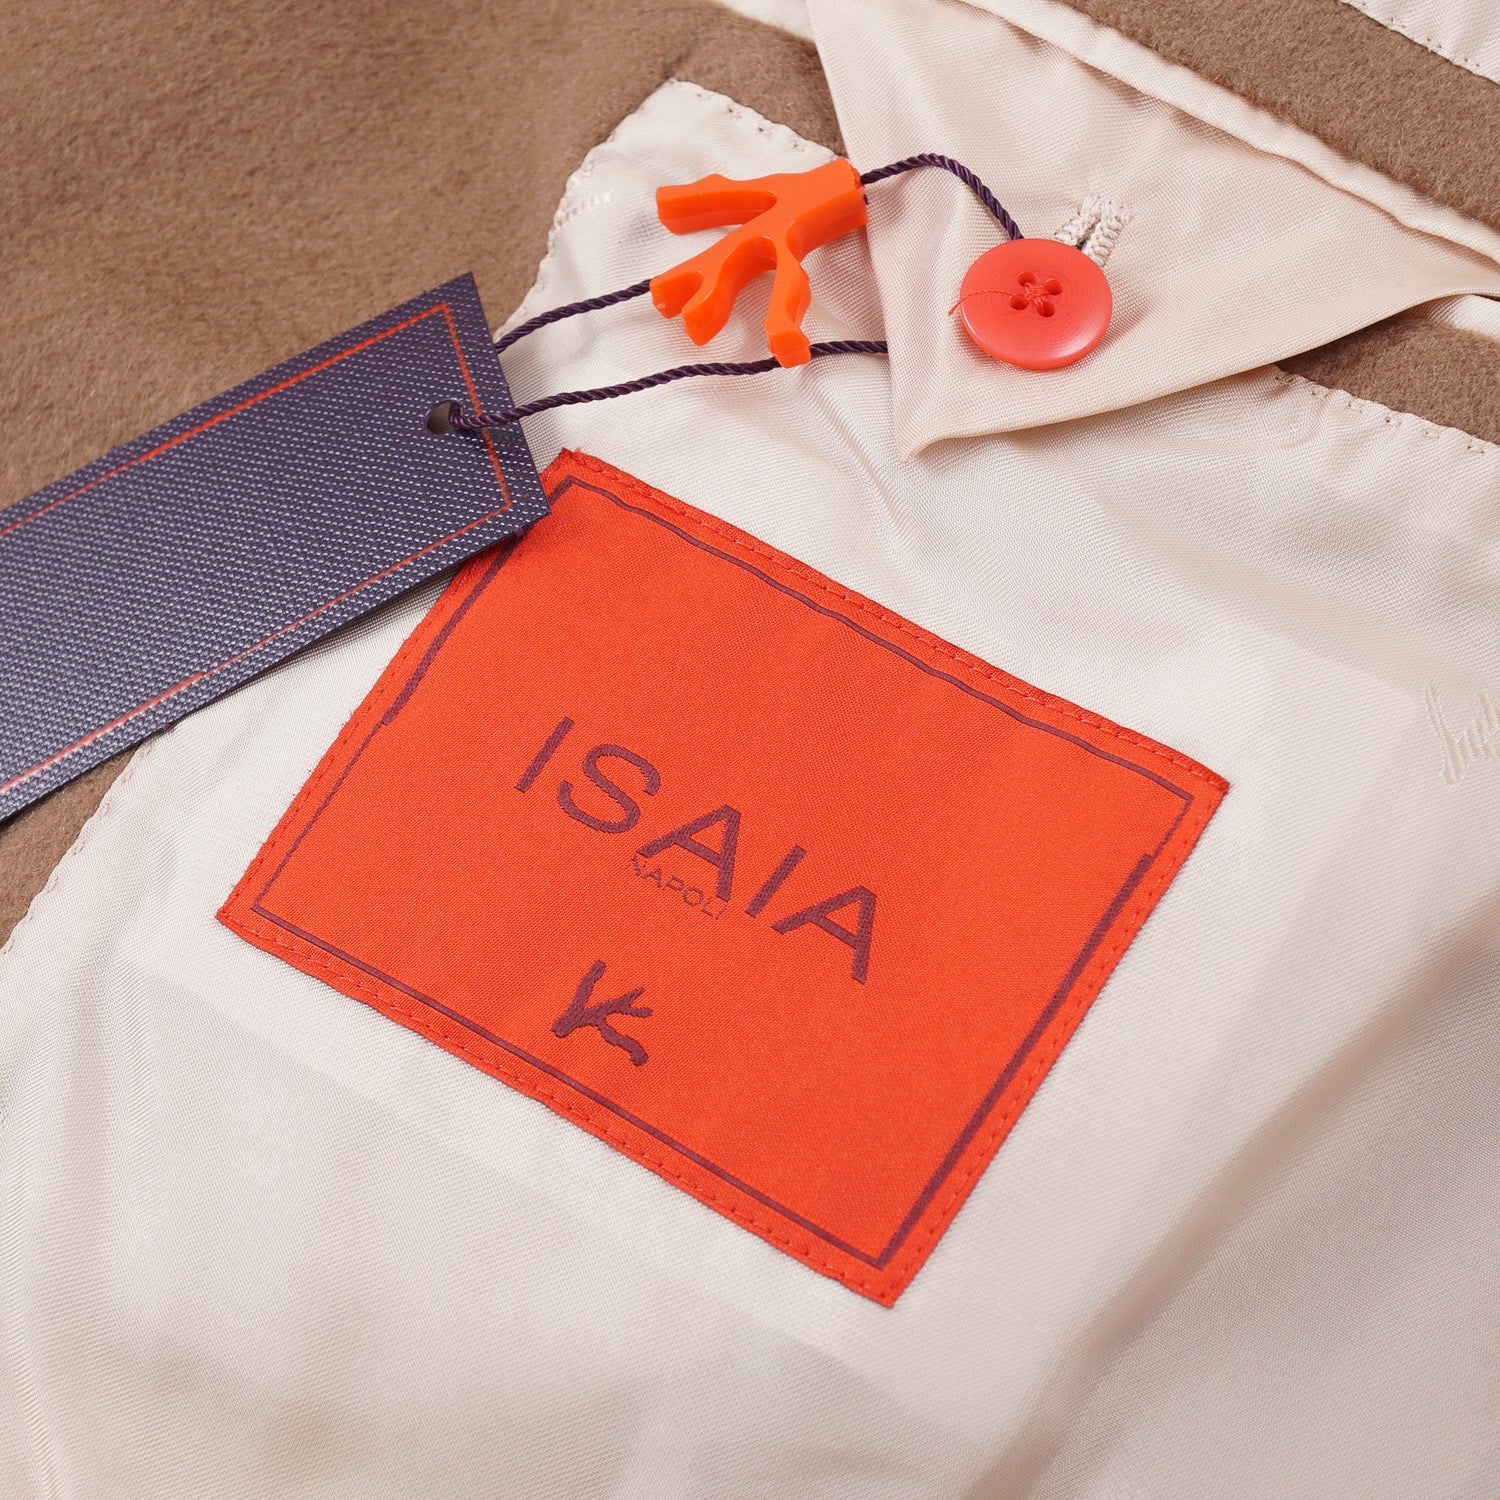 Isaia Tan Cashmere Overcoat - Top Shelf Apparel